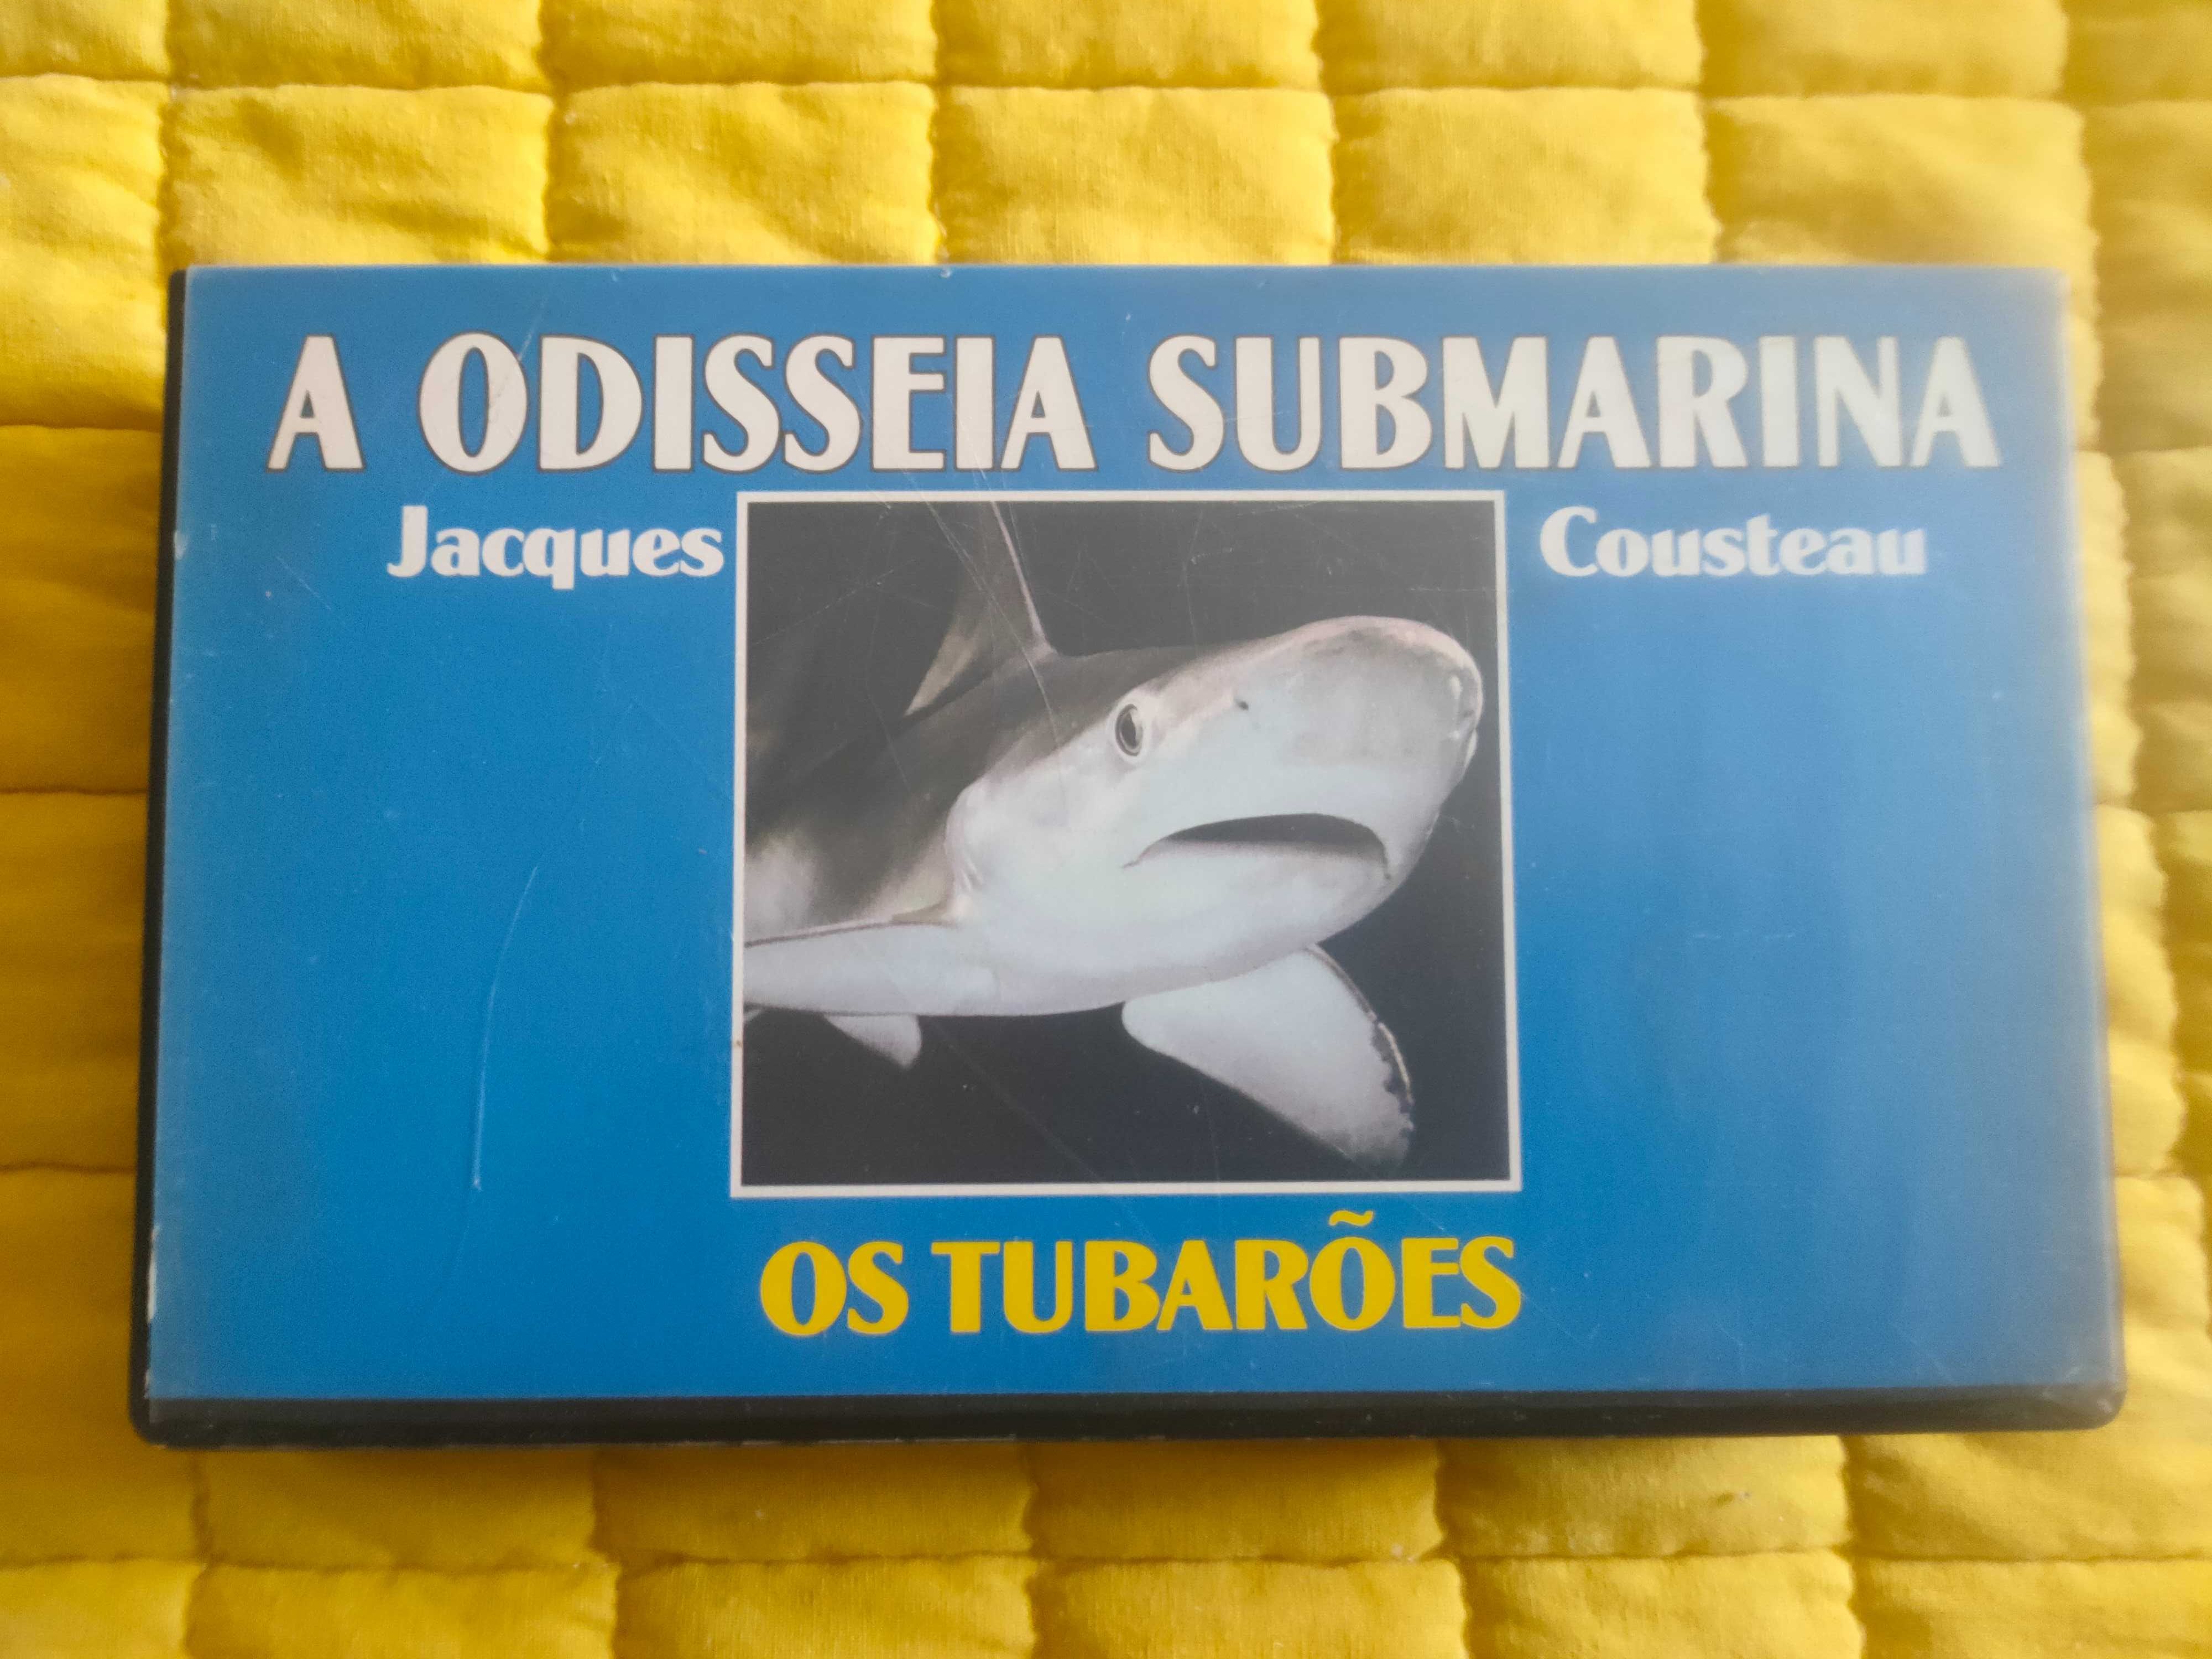 Vhs A Odisseia Submarina (Jacques Cousteau) Nº1 "Os Tubarões"